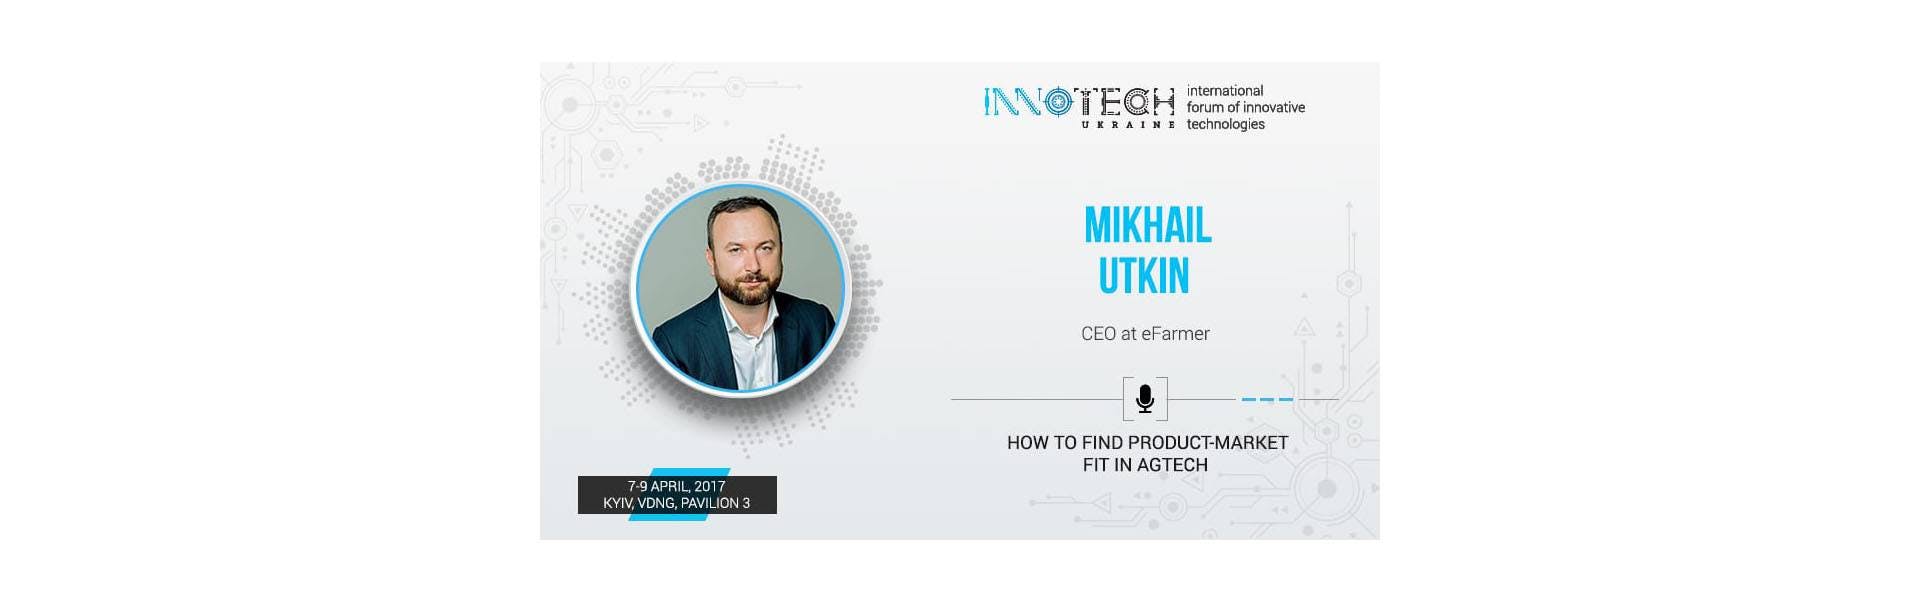 CEO of eFarmer Michael Utkin will speak on AgTech at Innotech 2017